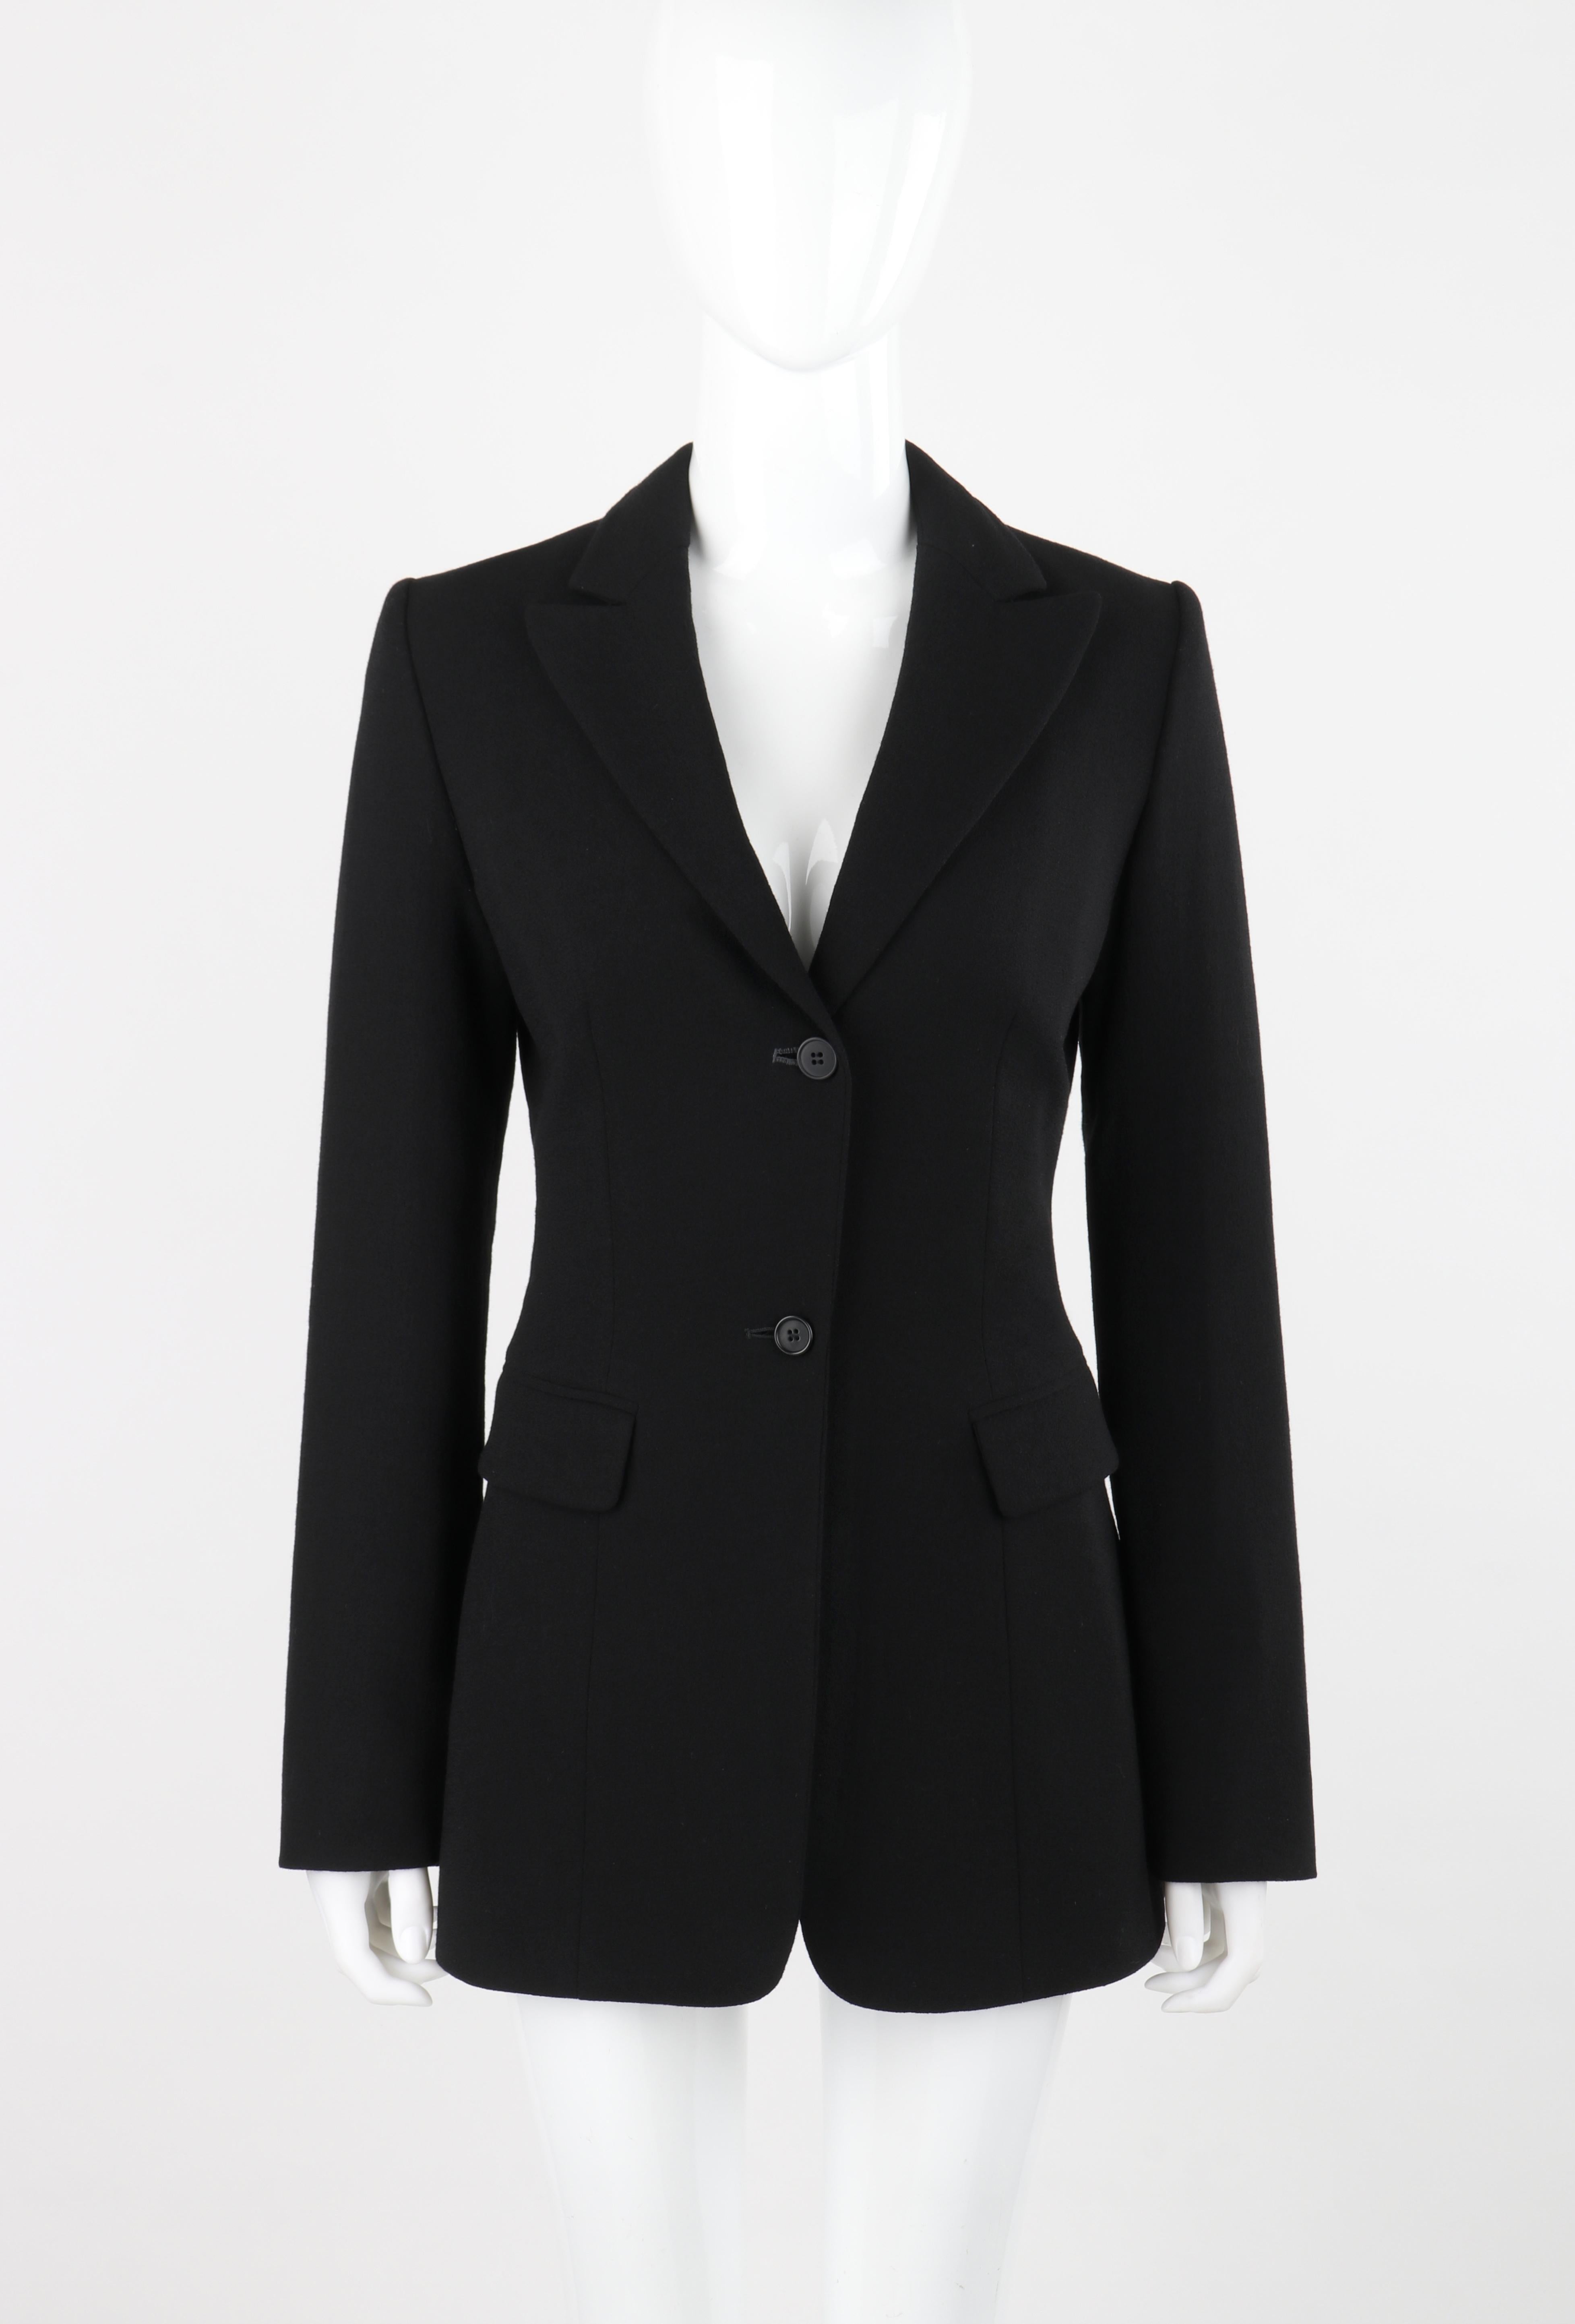 OWEN GASTER c.1990's Vtg Black Wool Structured Zip Open Back Blazer Jacket RARE Pour femmes en vente